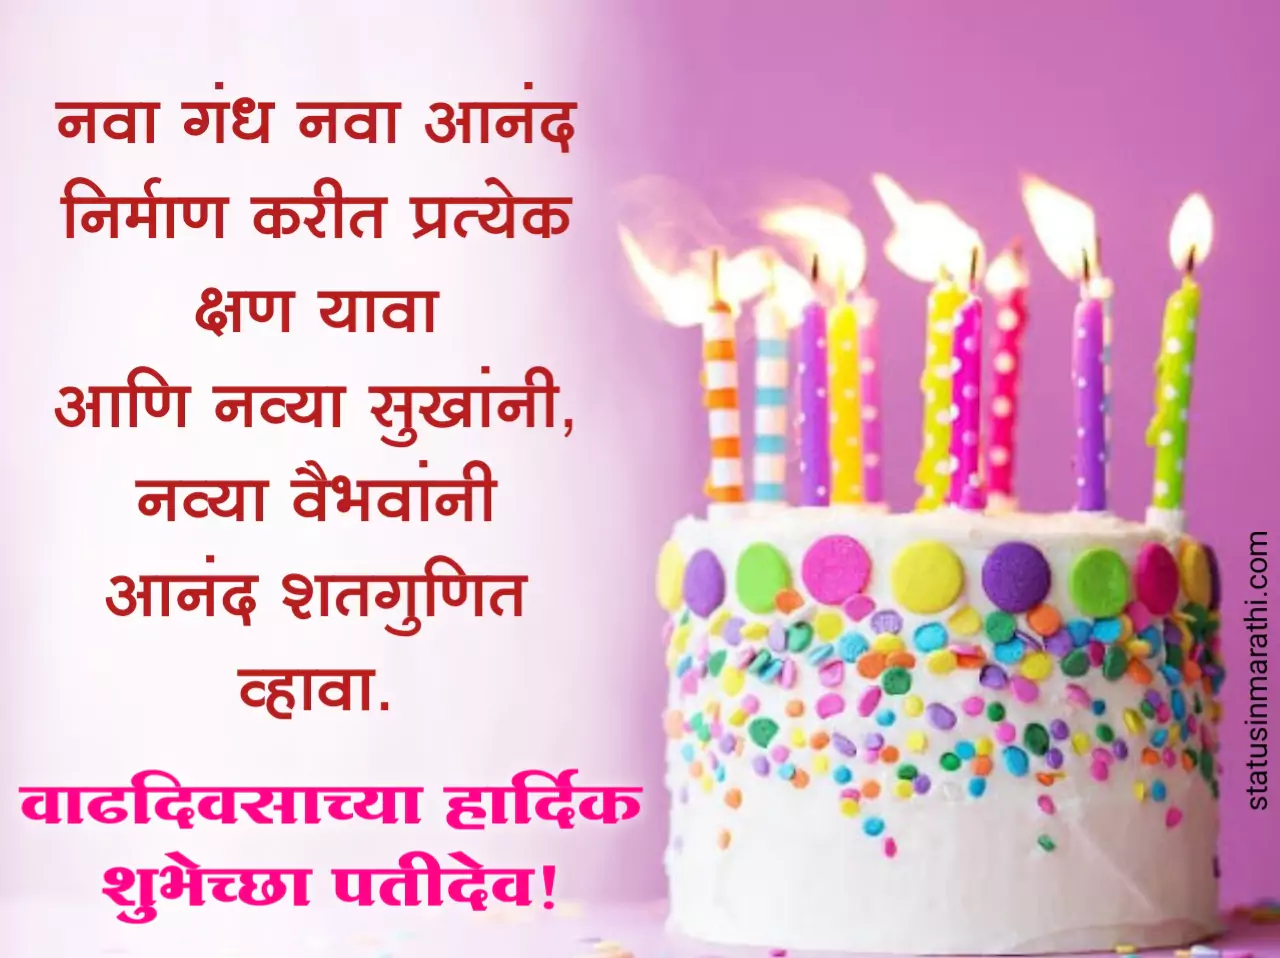 happy Birthday Image for husband in marathi